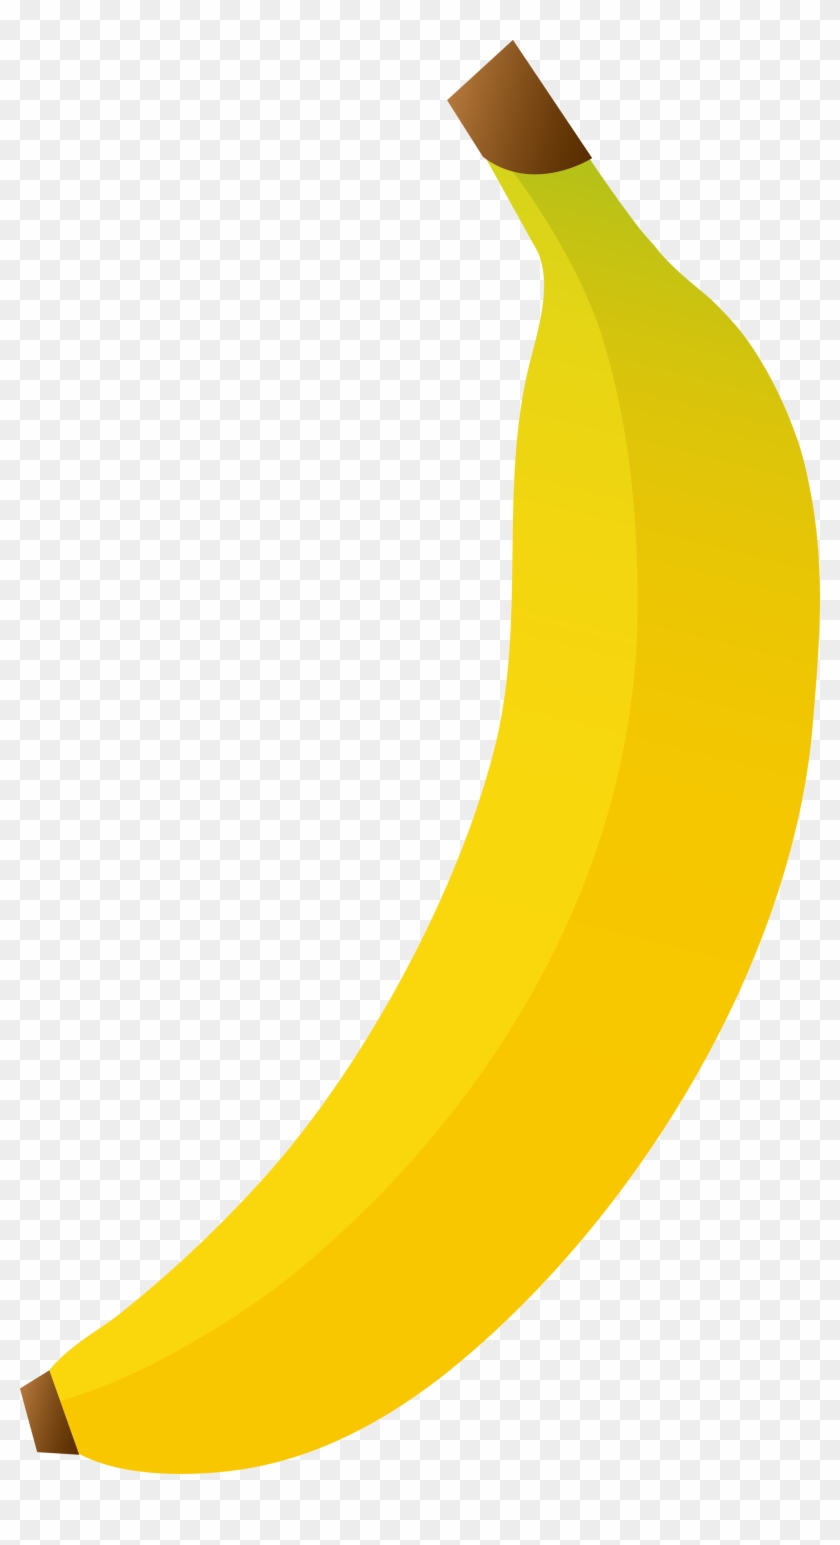 Banana Clip Art - Banana Clipart No Background #384576